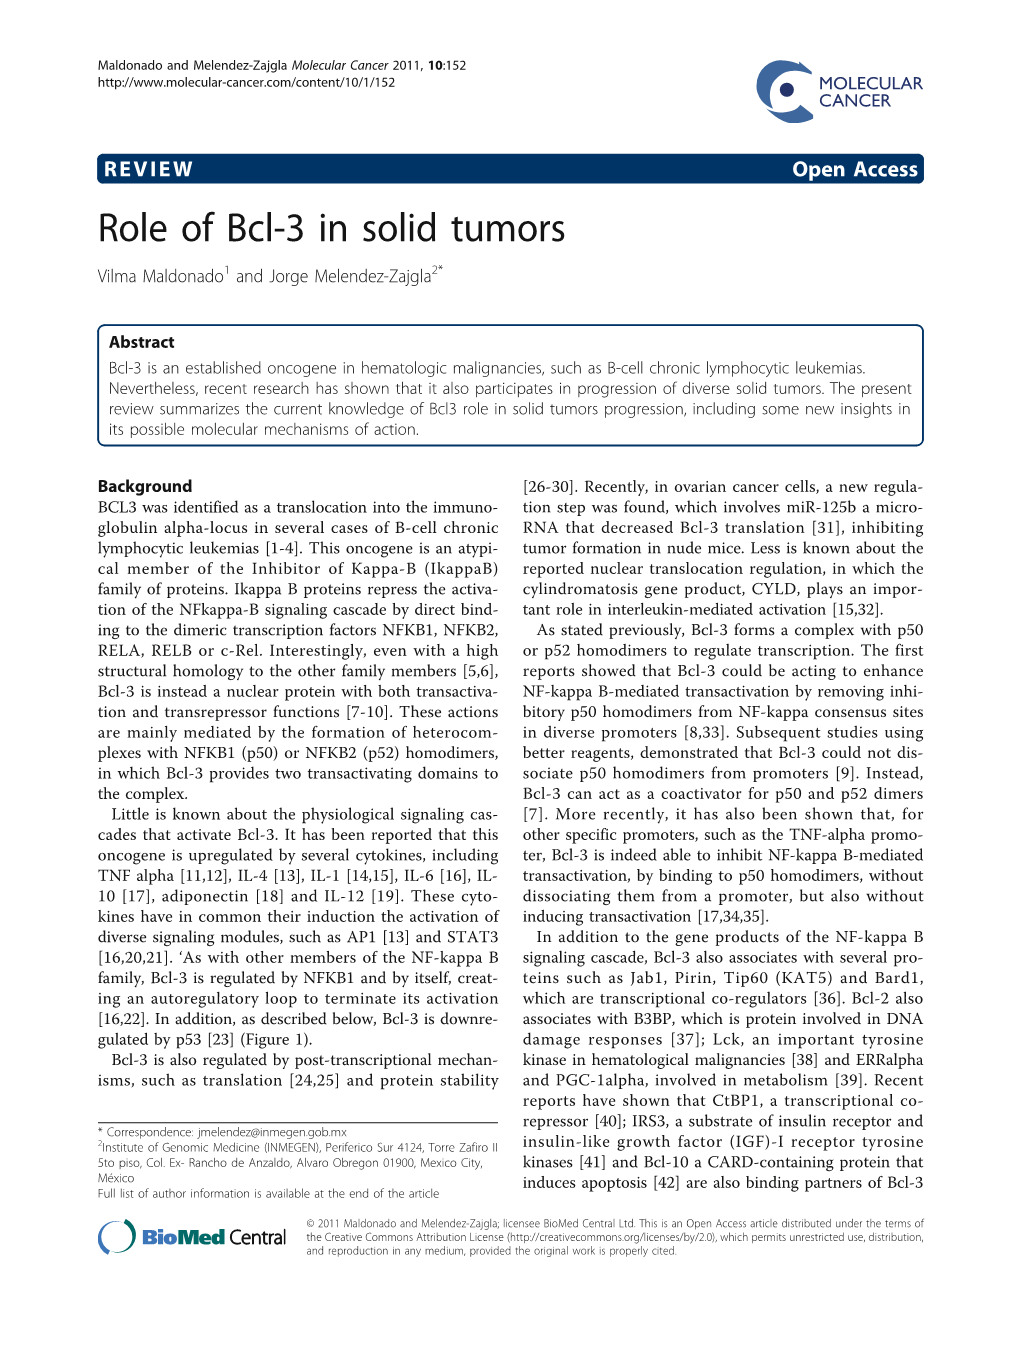 Role of Bcl-3 in Solid Tumors Vilma Maldonado1 and Jorge Melendez-Zajgla2*